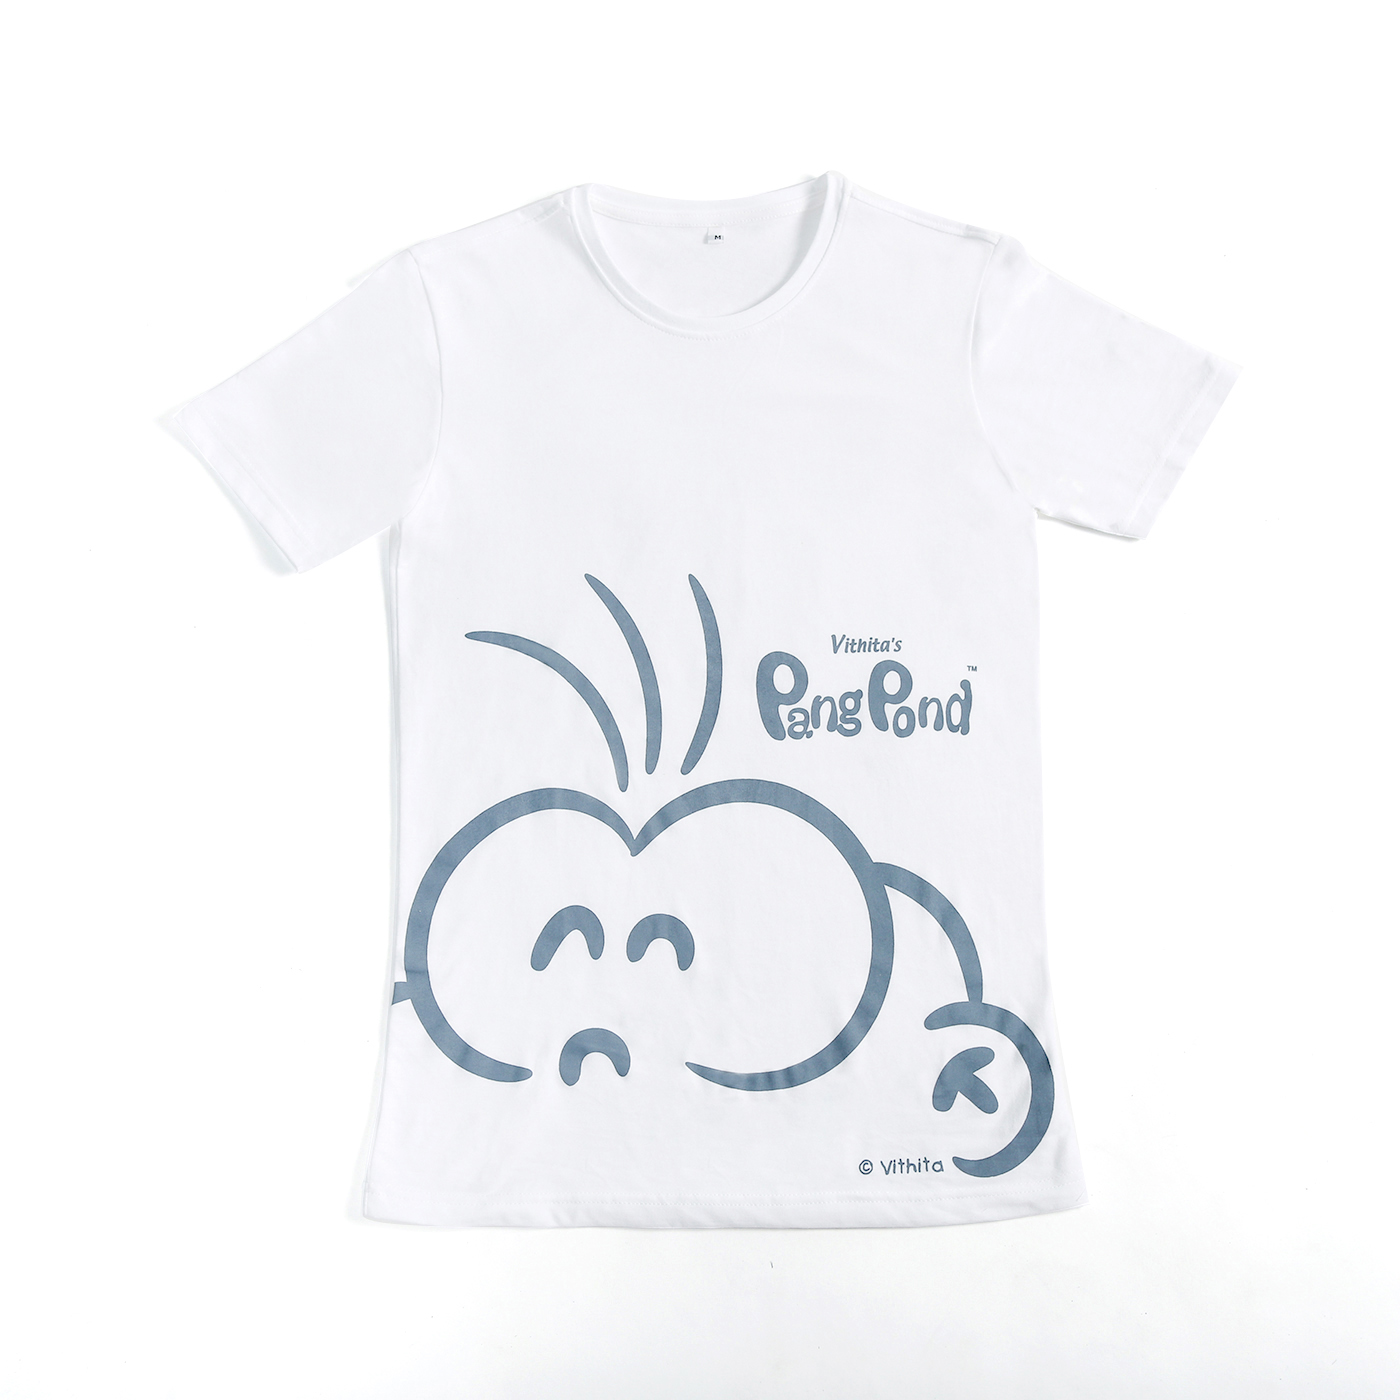 PangPond T-shirt: White [L]